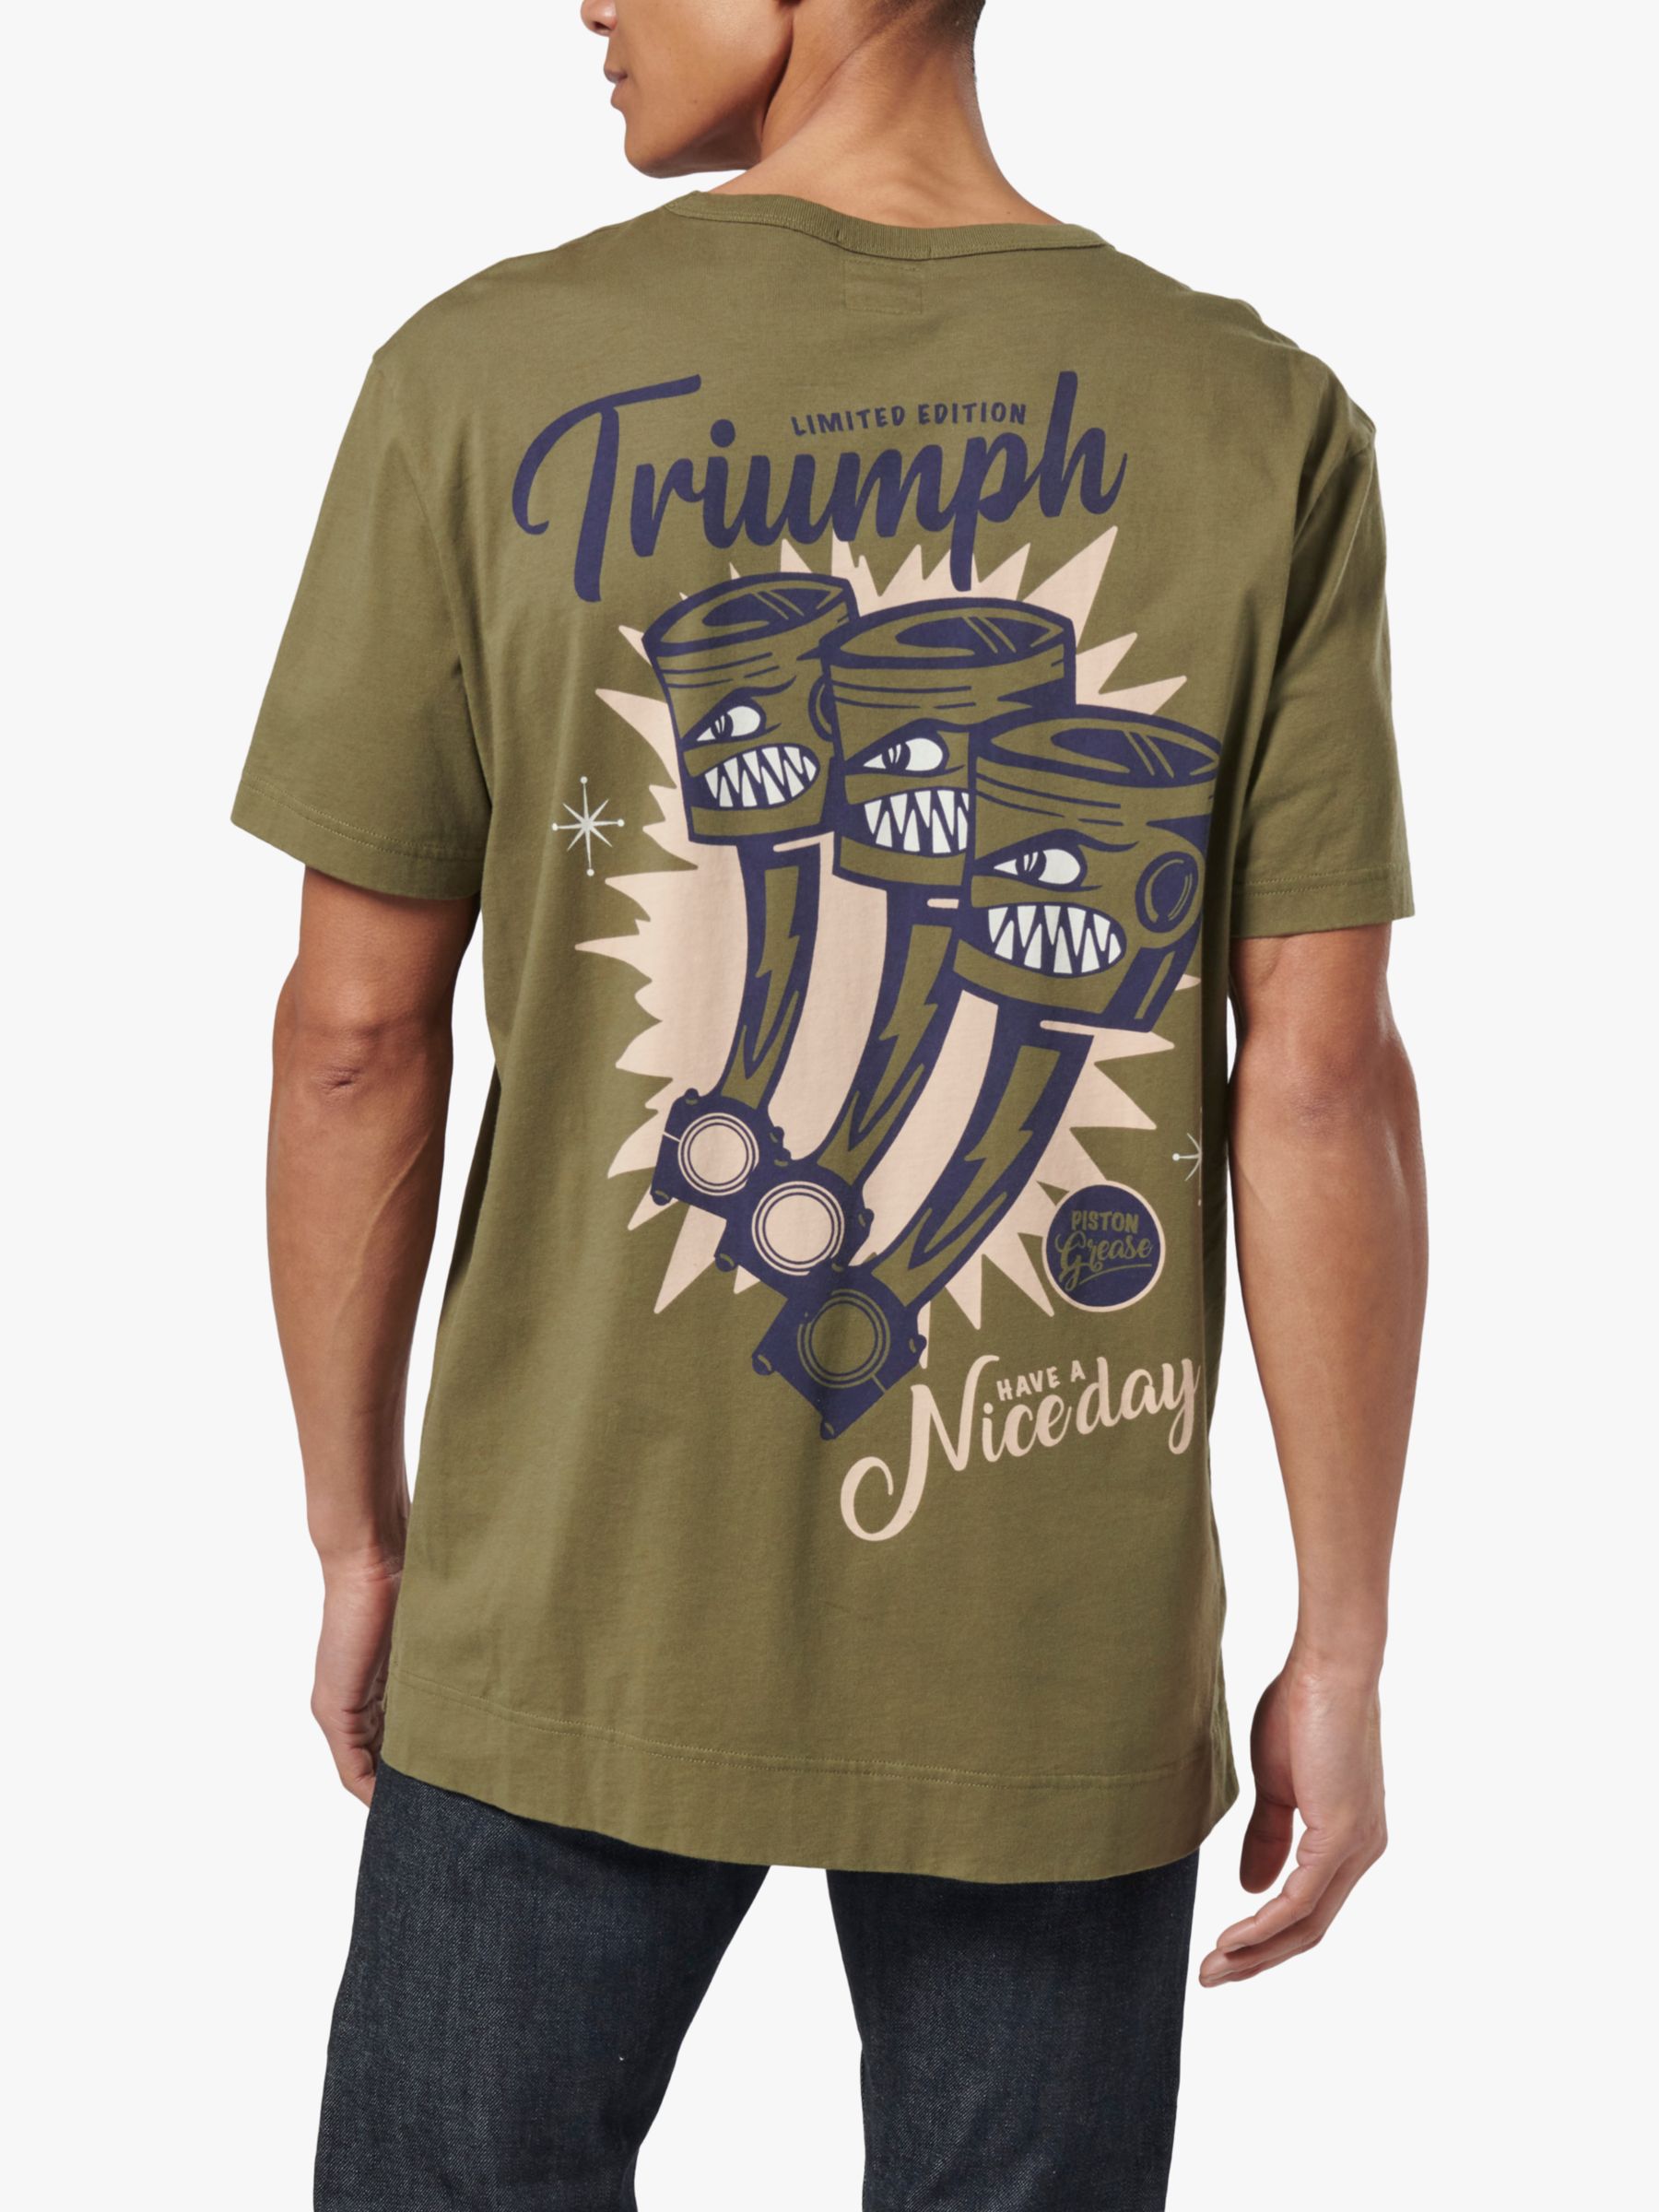 Triumph Motorcycles Triple Piston T-Shirt, Olive, S